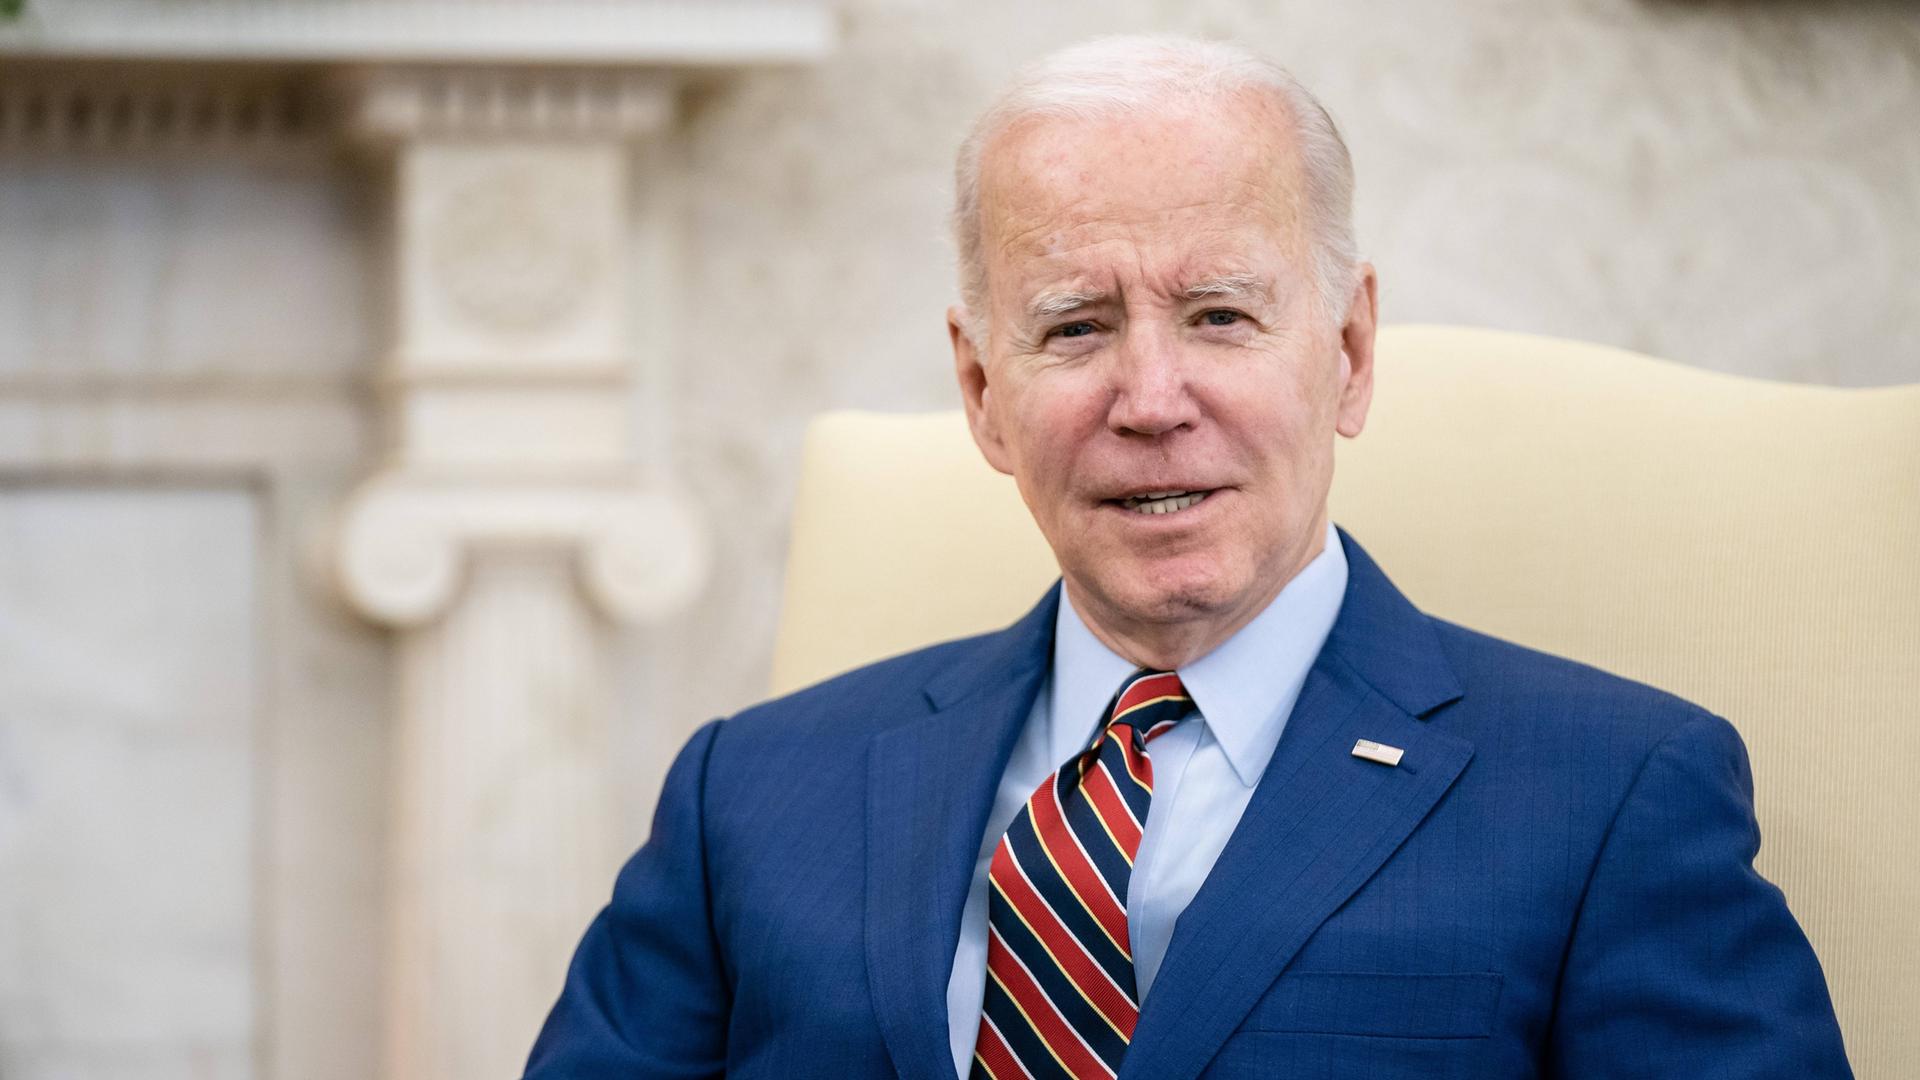 US-Präsident Joe Biden lächelnd im Porträt.